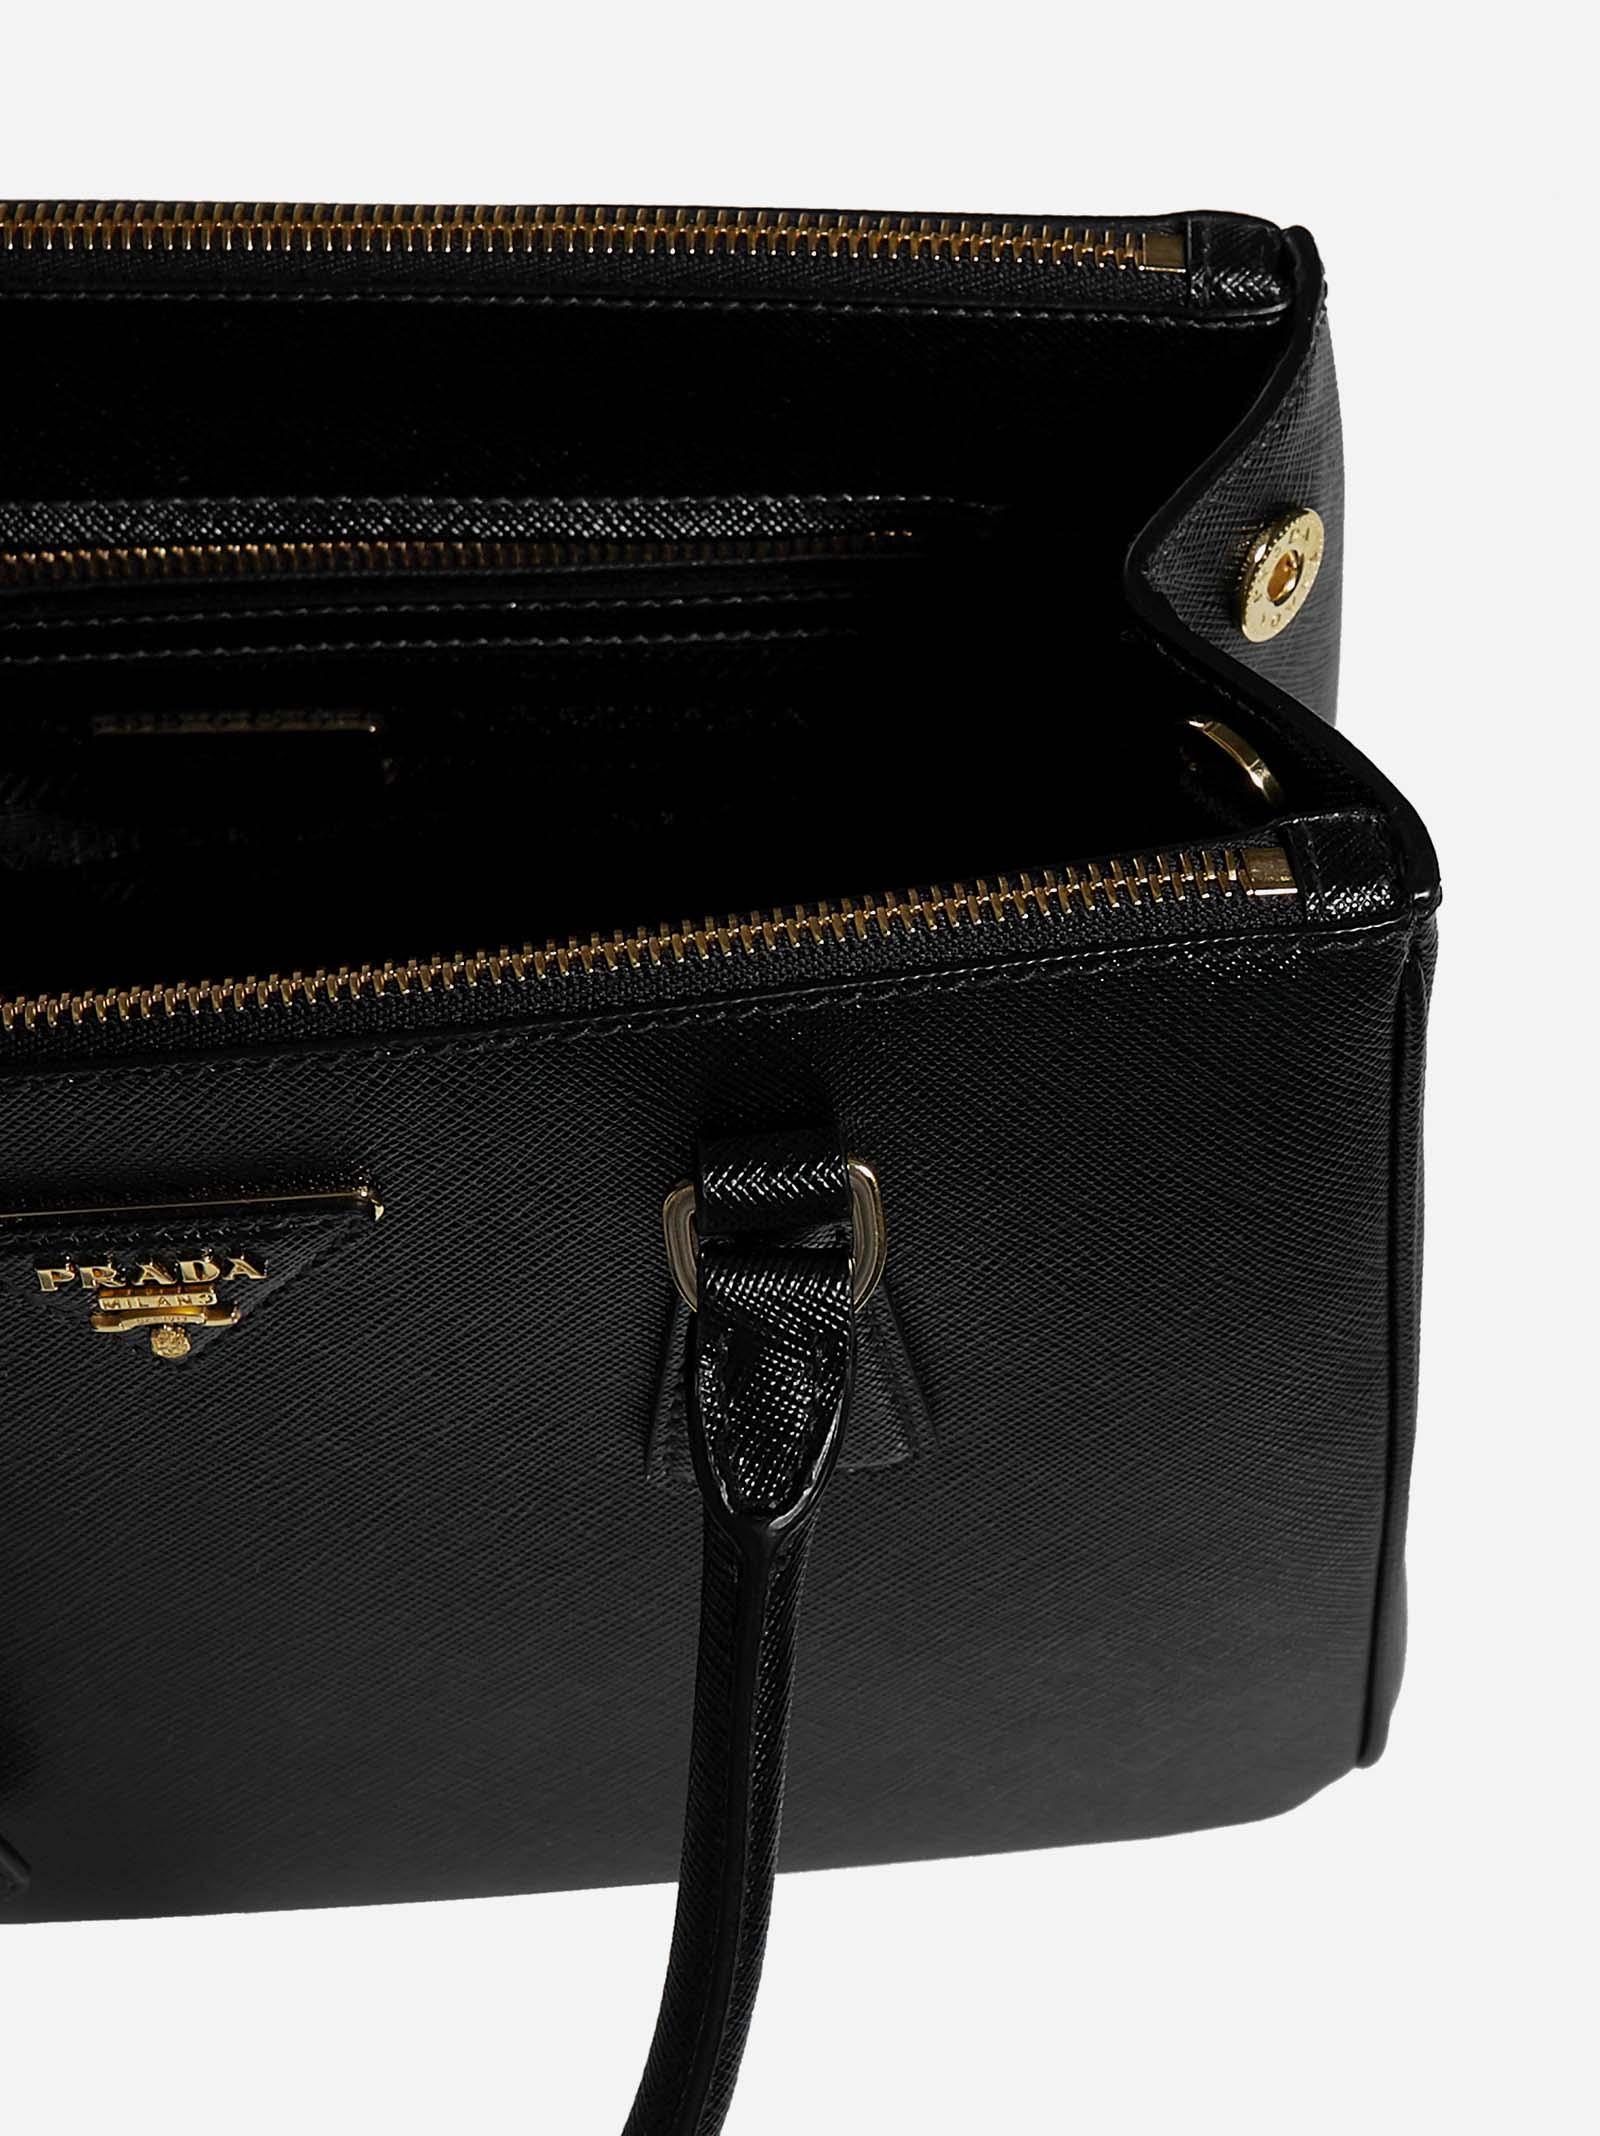 Prada Galleria Saffiano Leather Mini-Bag - Black